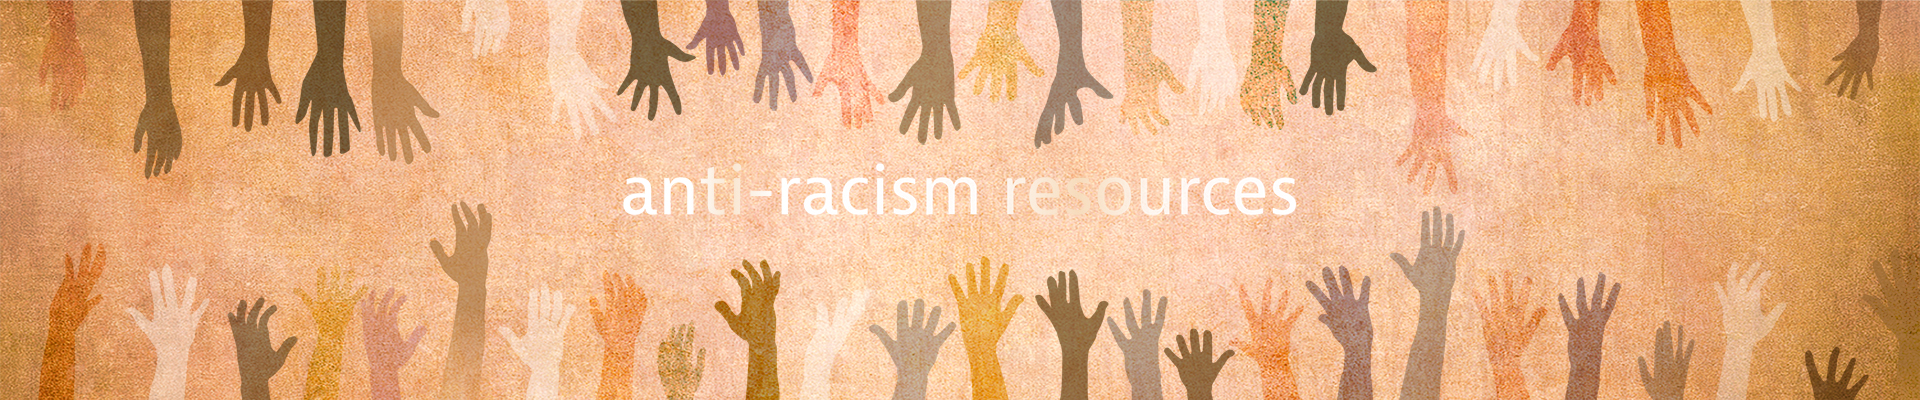 Anti Racism Resources 